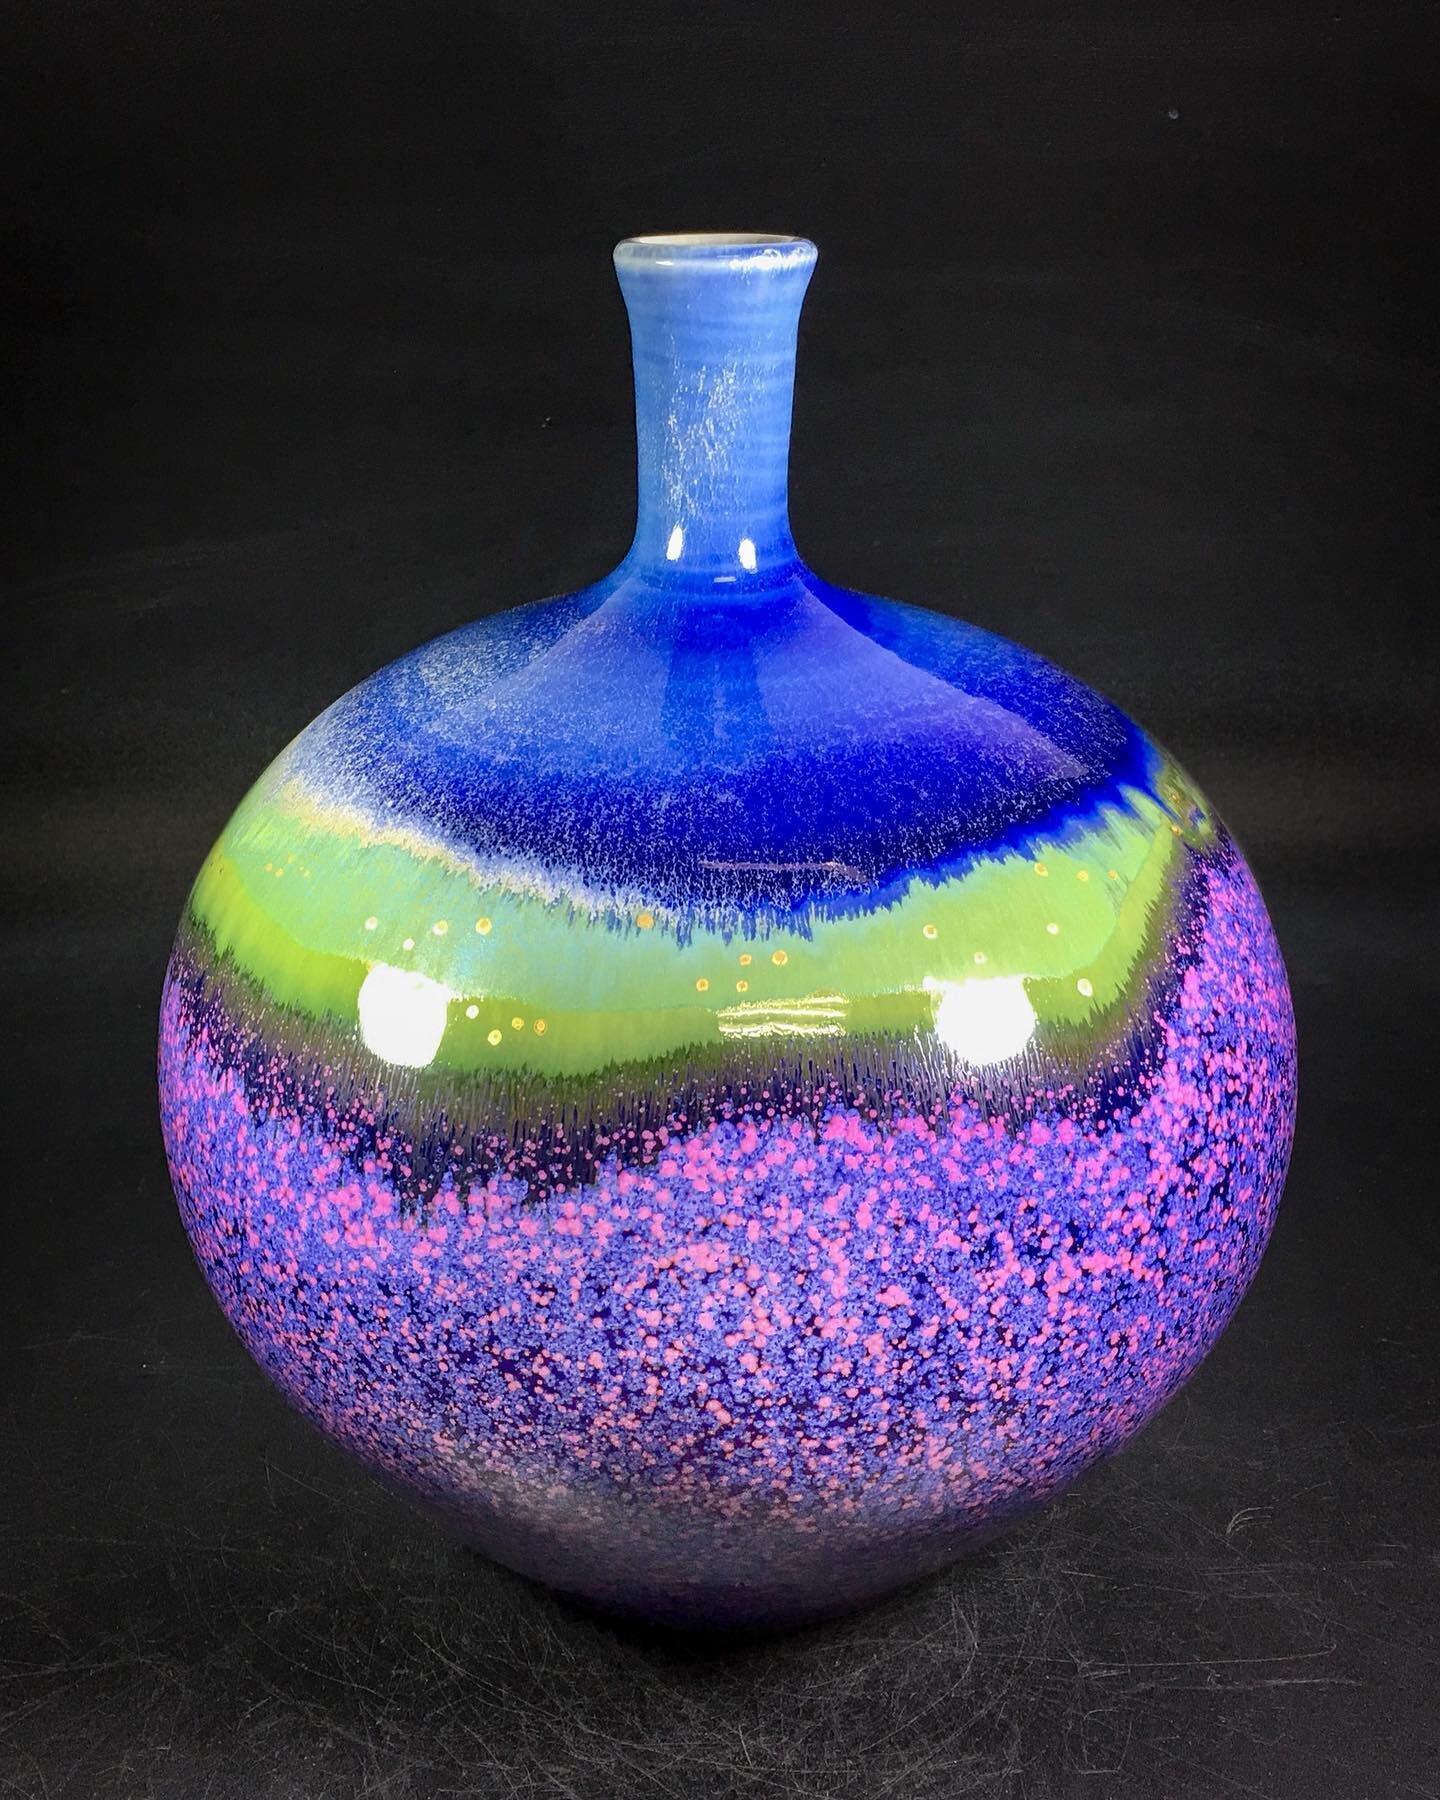 Some vibrant colors to brighten up you day 😄

#crystallineglaze #ceramicart #ceramicglaze #wheelthrownpottery #vase #goldluster #lavenderfields #modernceramics #yuyinghuang #ceramics #pottery